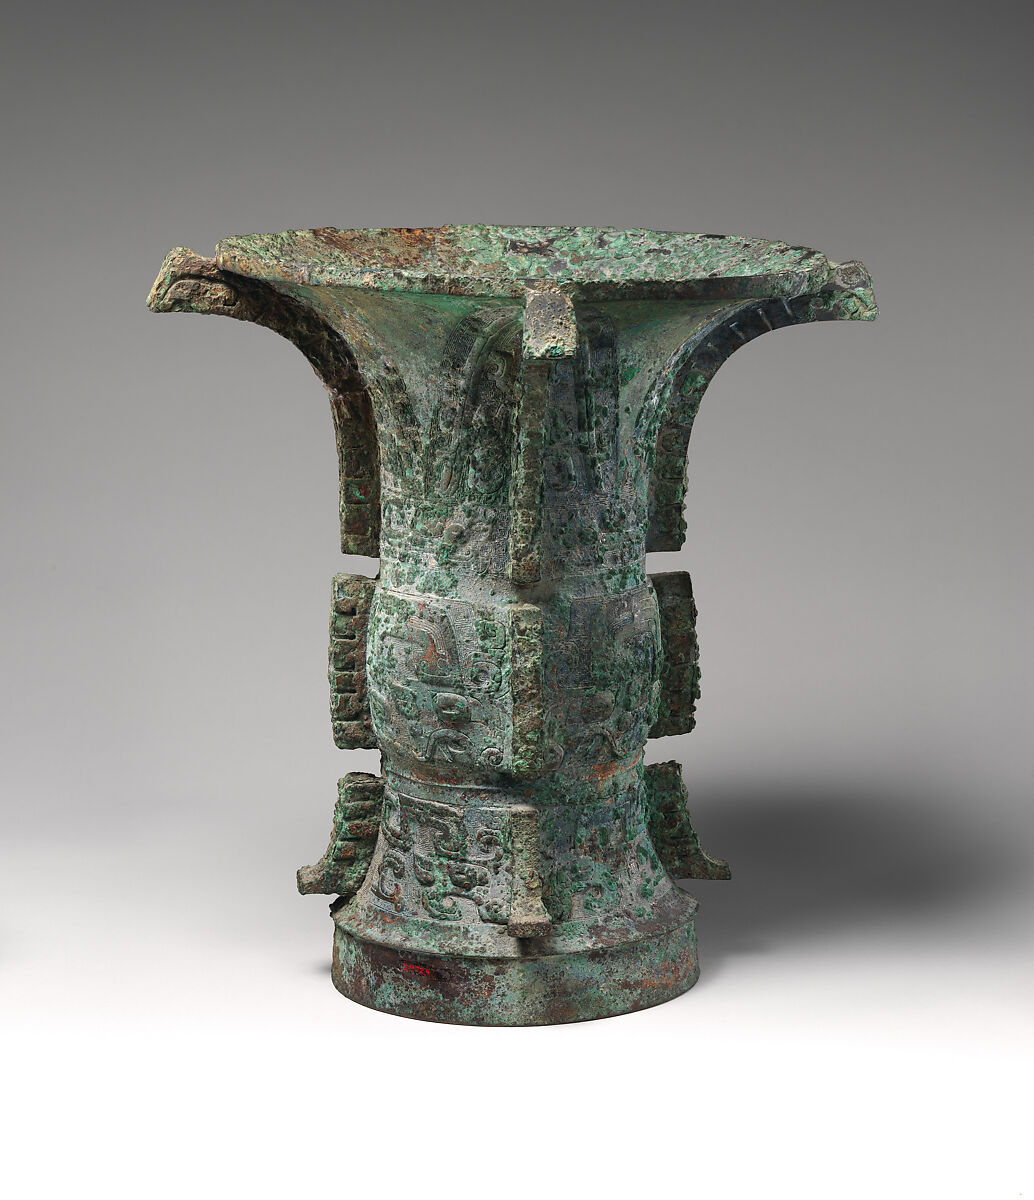 Ritual wine container (zun), Bronze, China 